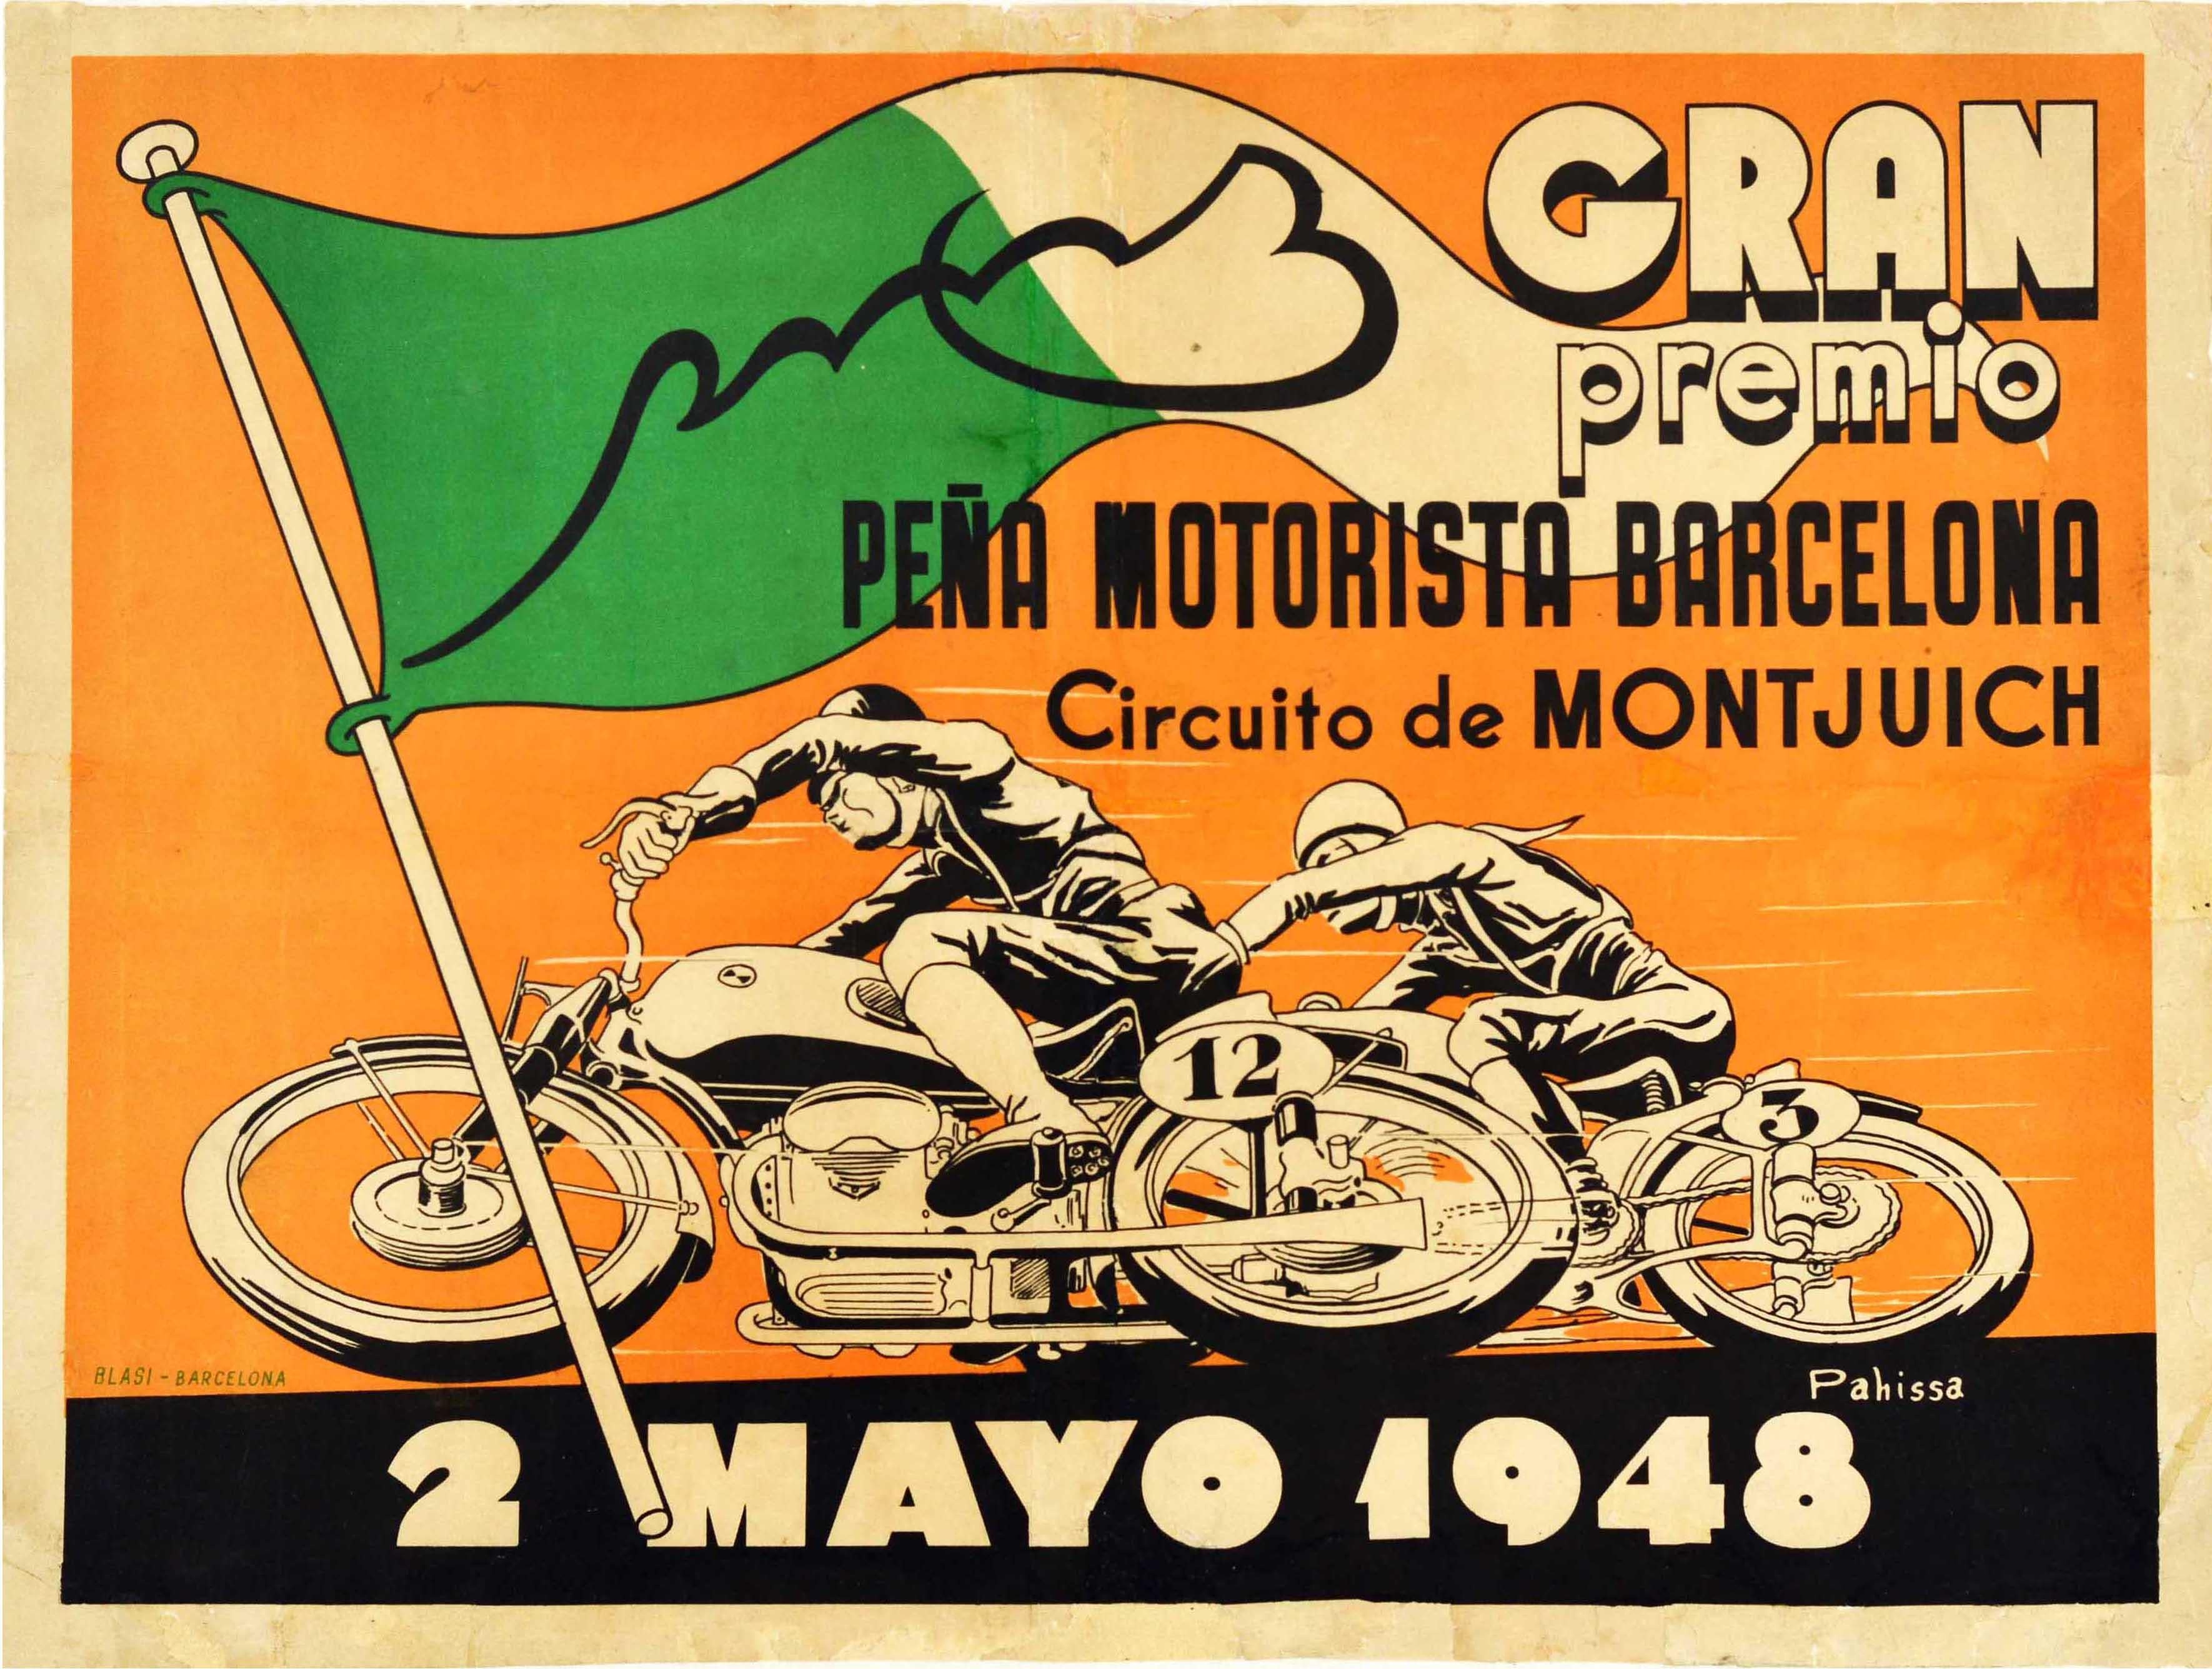 Pahissa Print - Original Vintage Motorsport Poster Gran Premio Pena Motorista Barcelona Montjuic